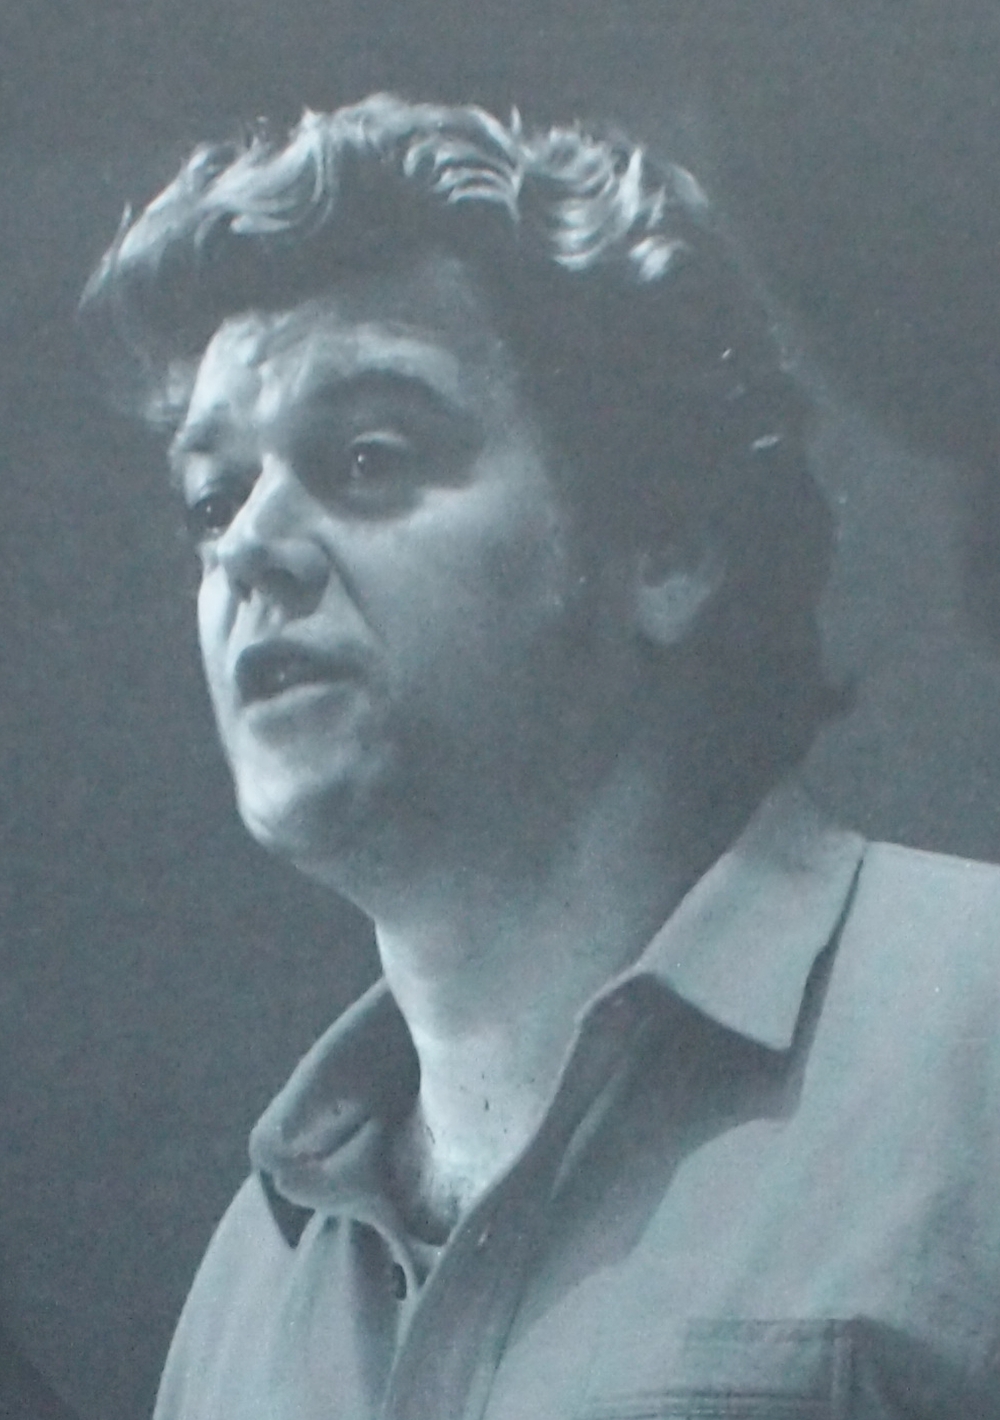 Hermann PREY, photo publiée entre autres dans l'album DGG 2720 053 (Il barbiere di Siviglia, Gioacchino Rossini, Claudio Abbado, 1971, cliquer pour une vue agrandie